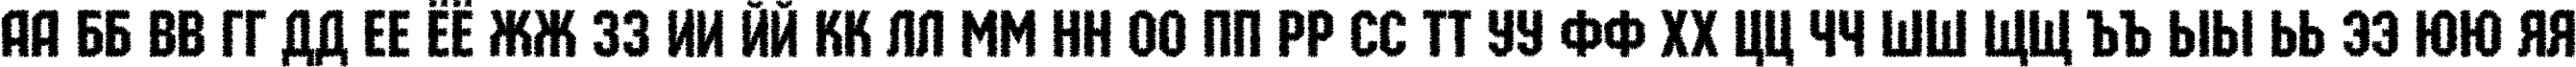 Пример написания русского алфавита шрифтом a_MachinaOrtoPrk